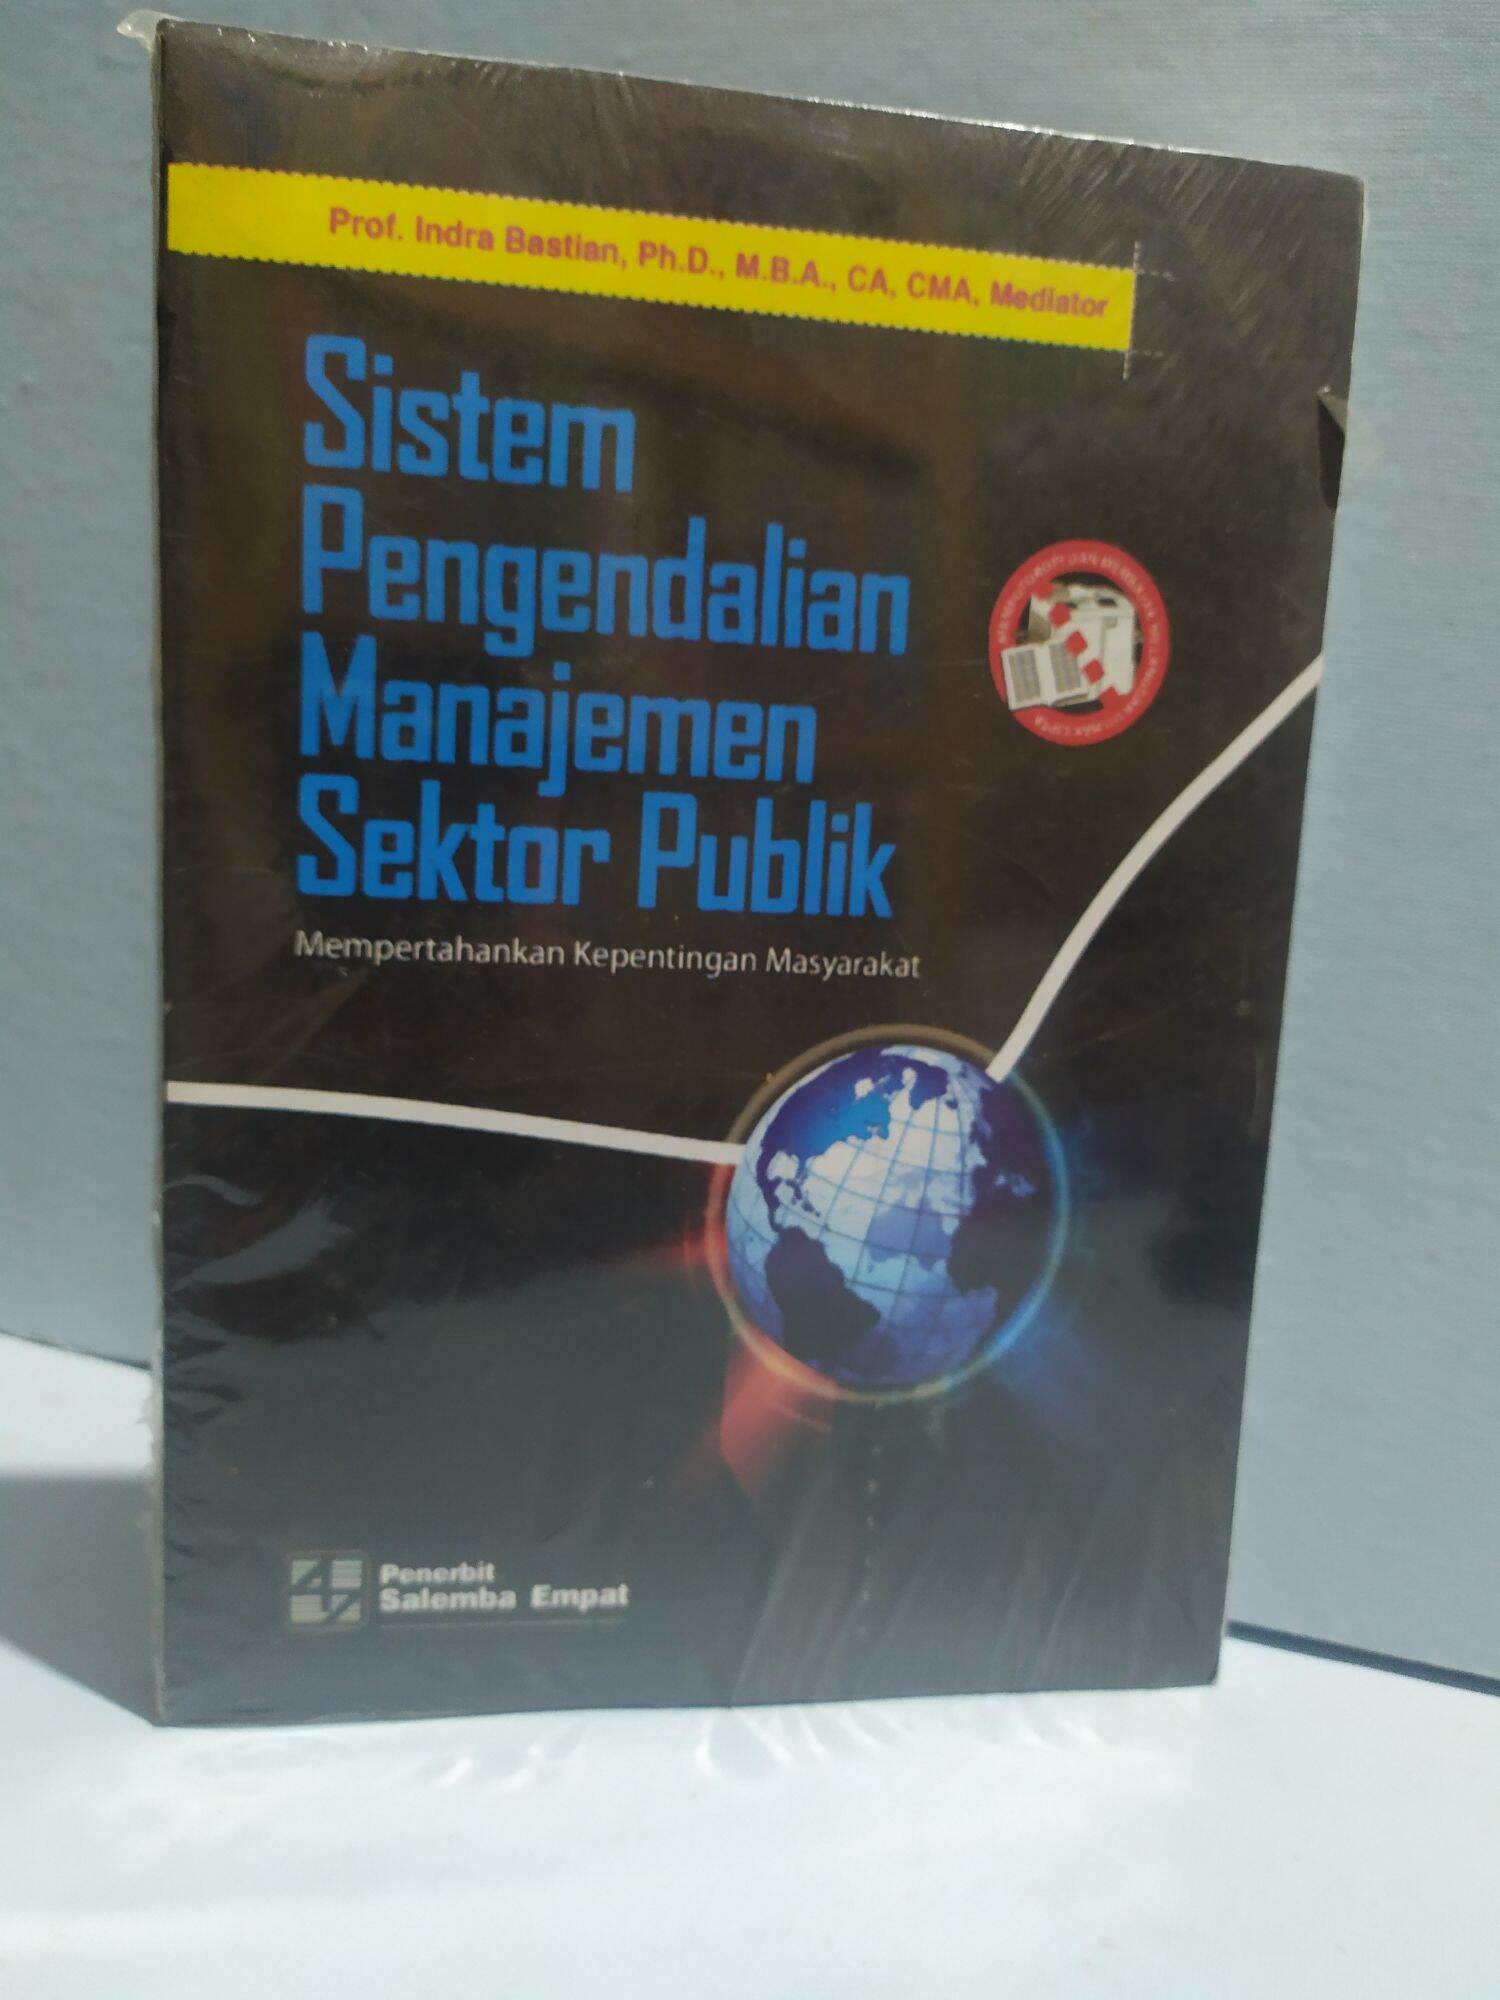 Buku Sistem Pengendalian Manajemen Sektor Publik Lazada Indonesia 1125